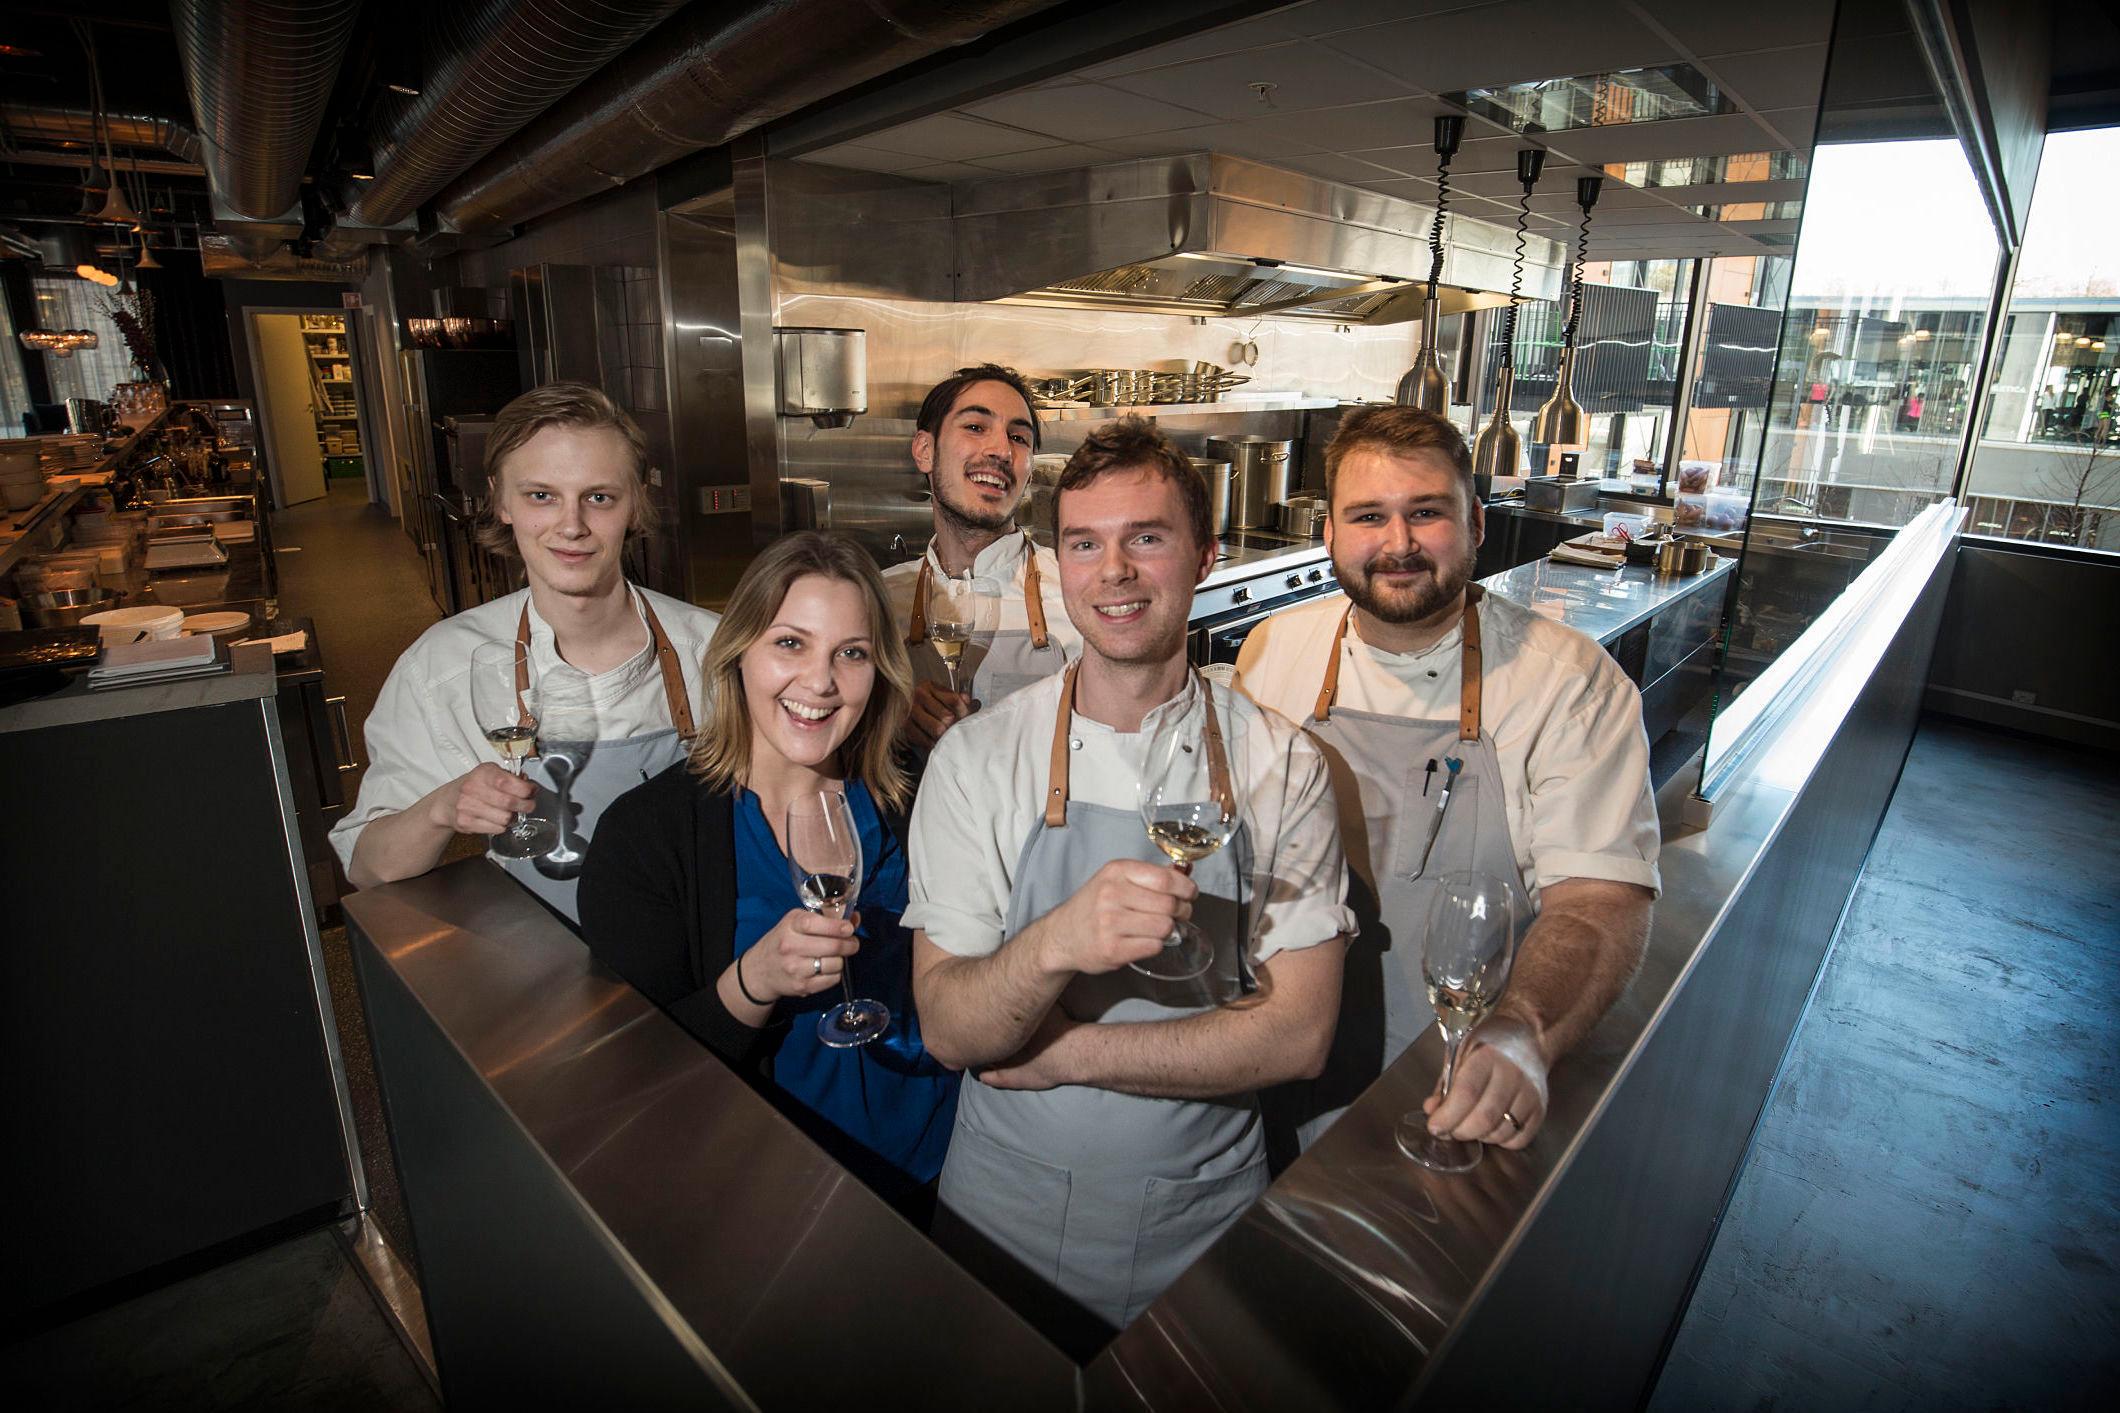 NY STJERNE: Sous chef Jay Boyle jubler med resten av personalet på Restaurant Kontrast i Oslo. Foto: Mattis Sandblad/VG